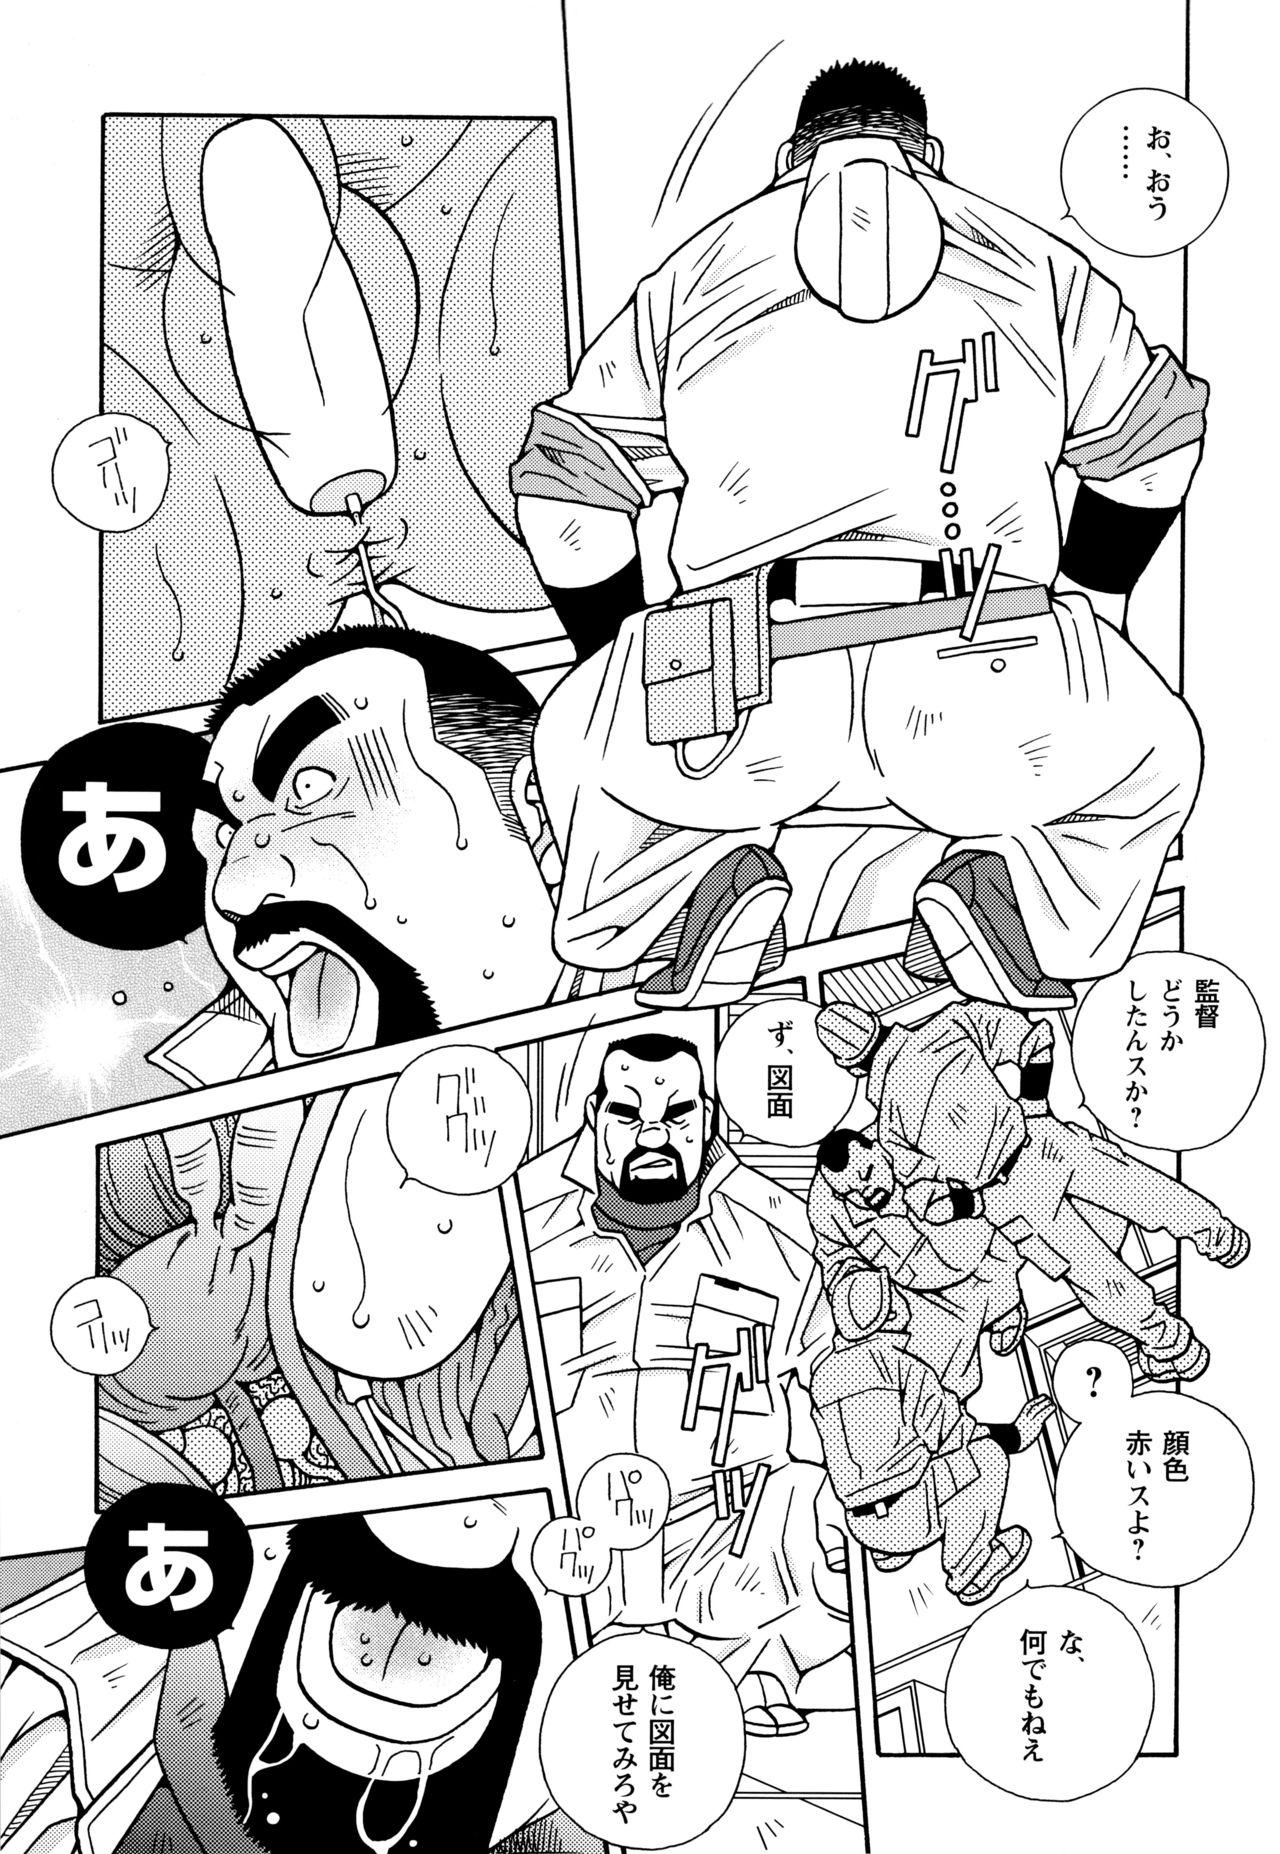 Genba Kantoku Inkei - 	Beating the Bull by KAZ 21